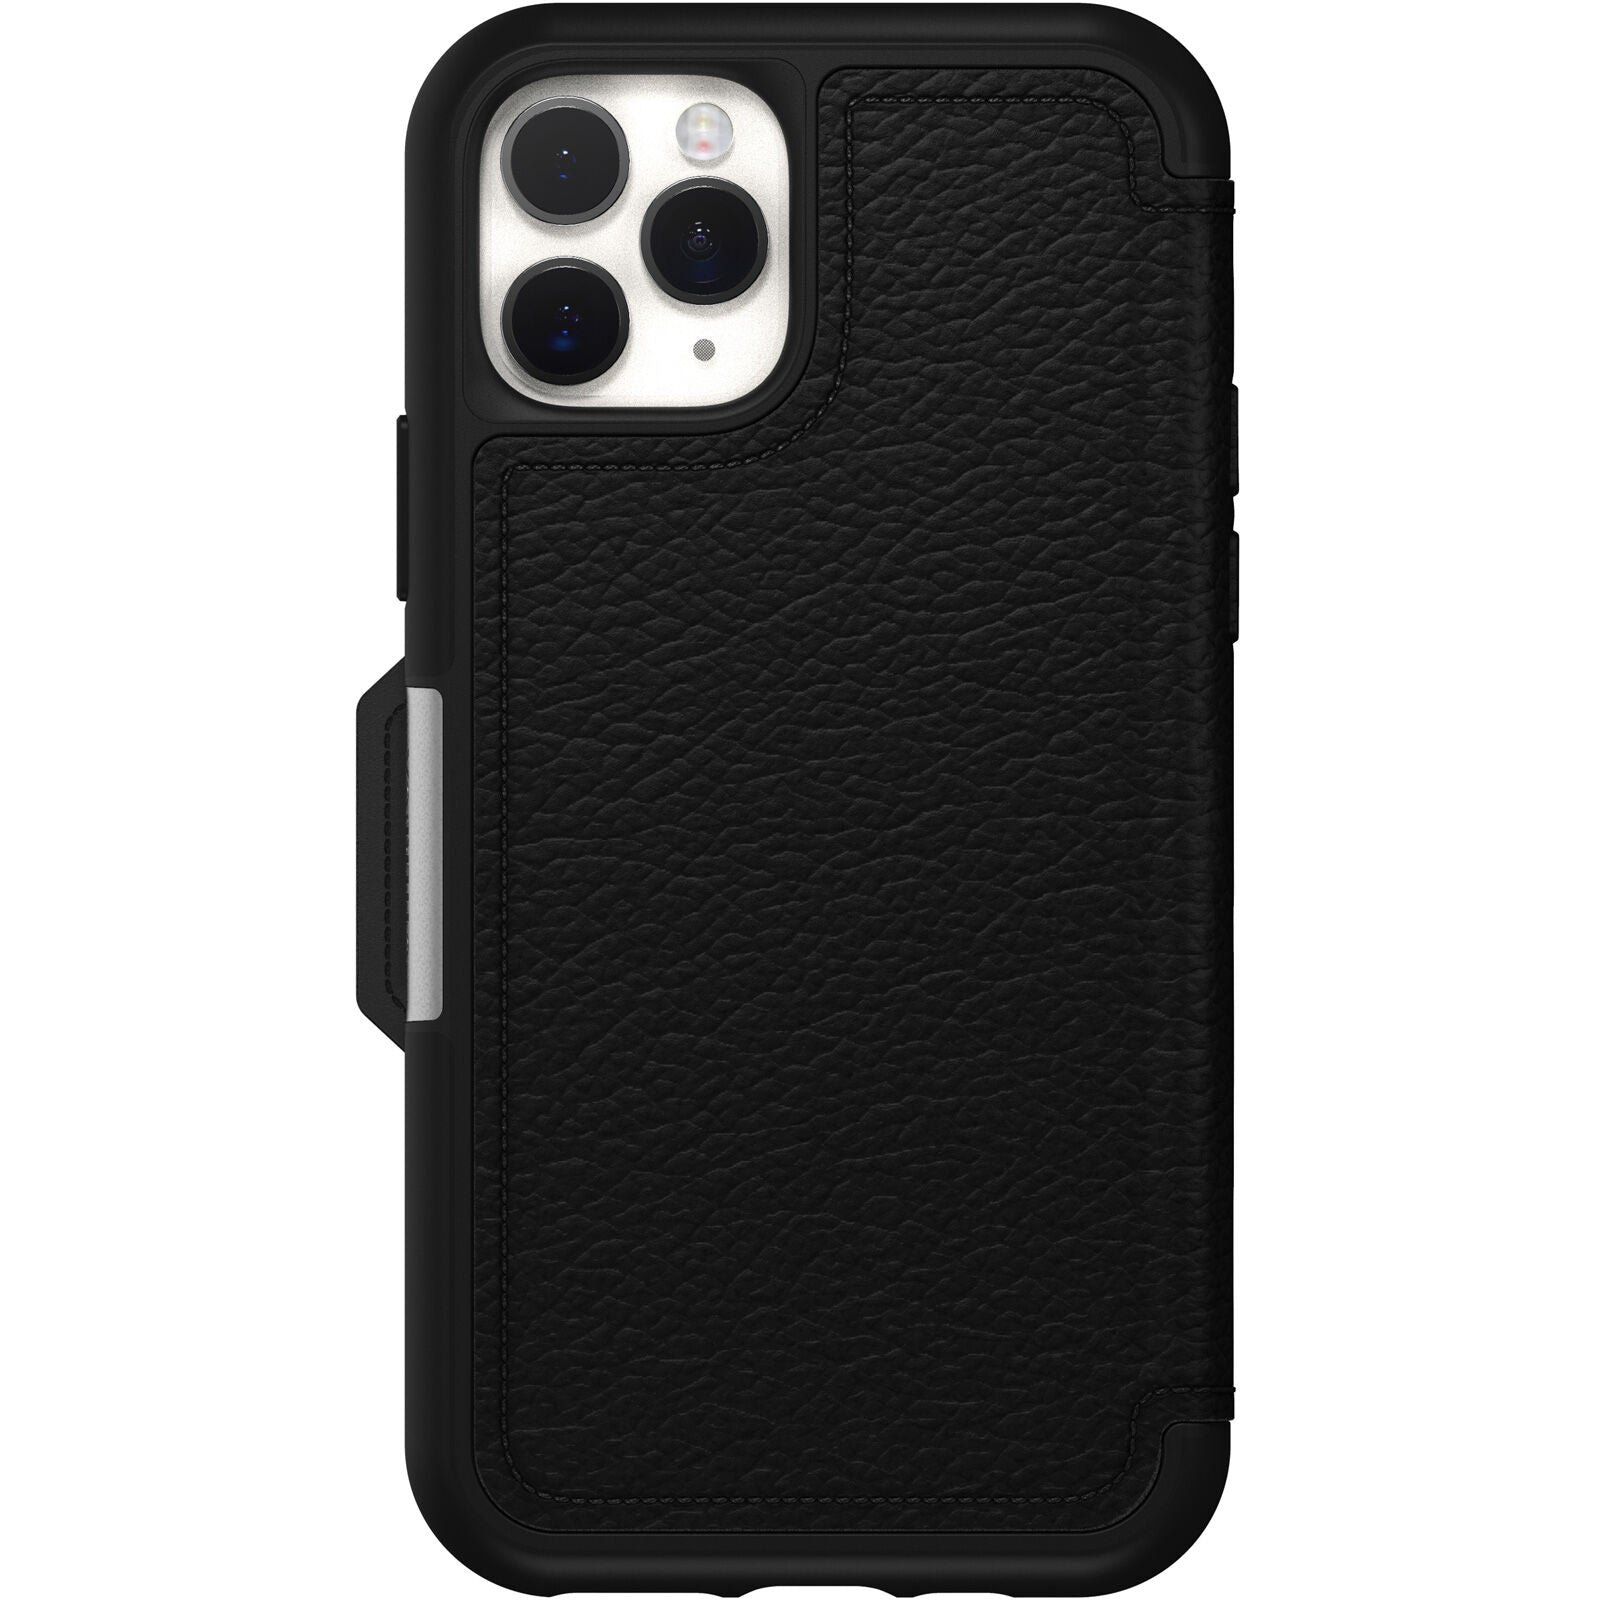 Otterbox Strada Case for iPhone 11 Pro - Black